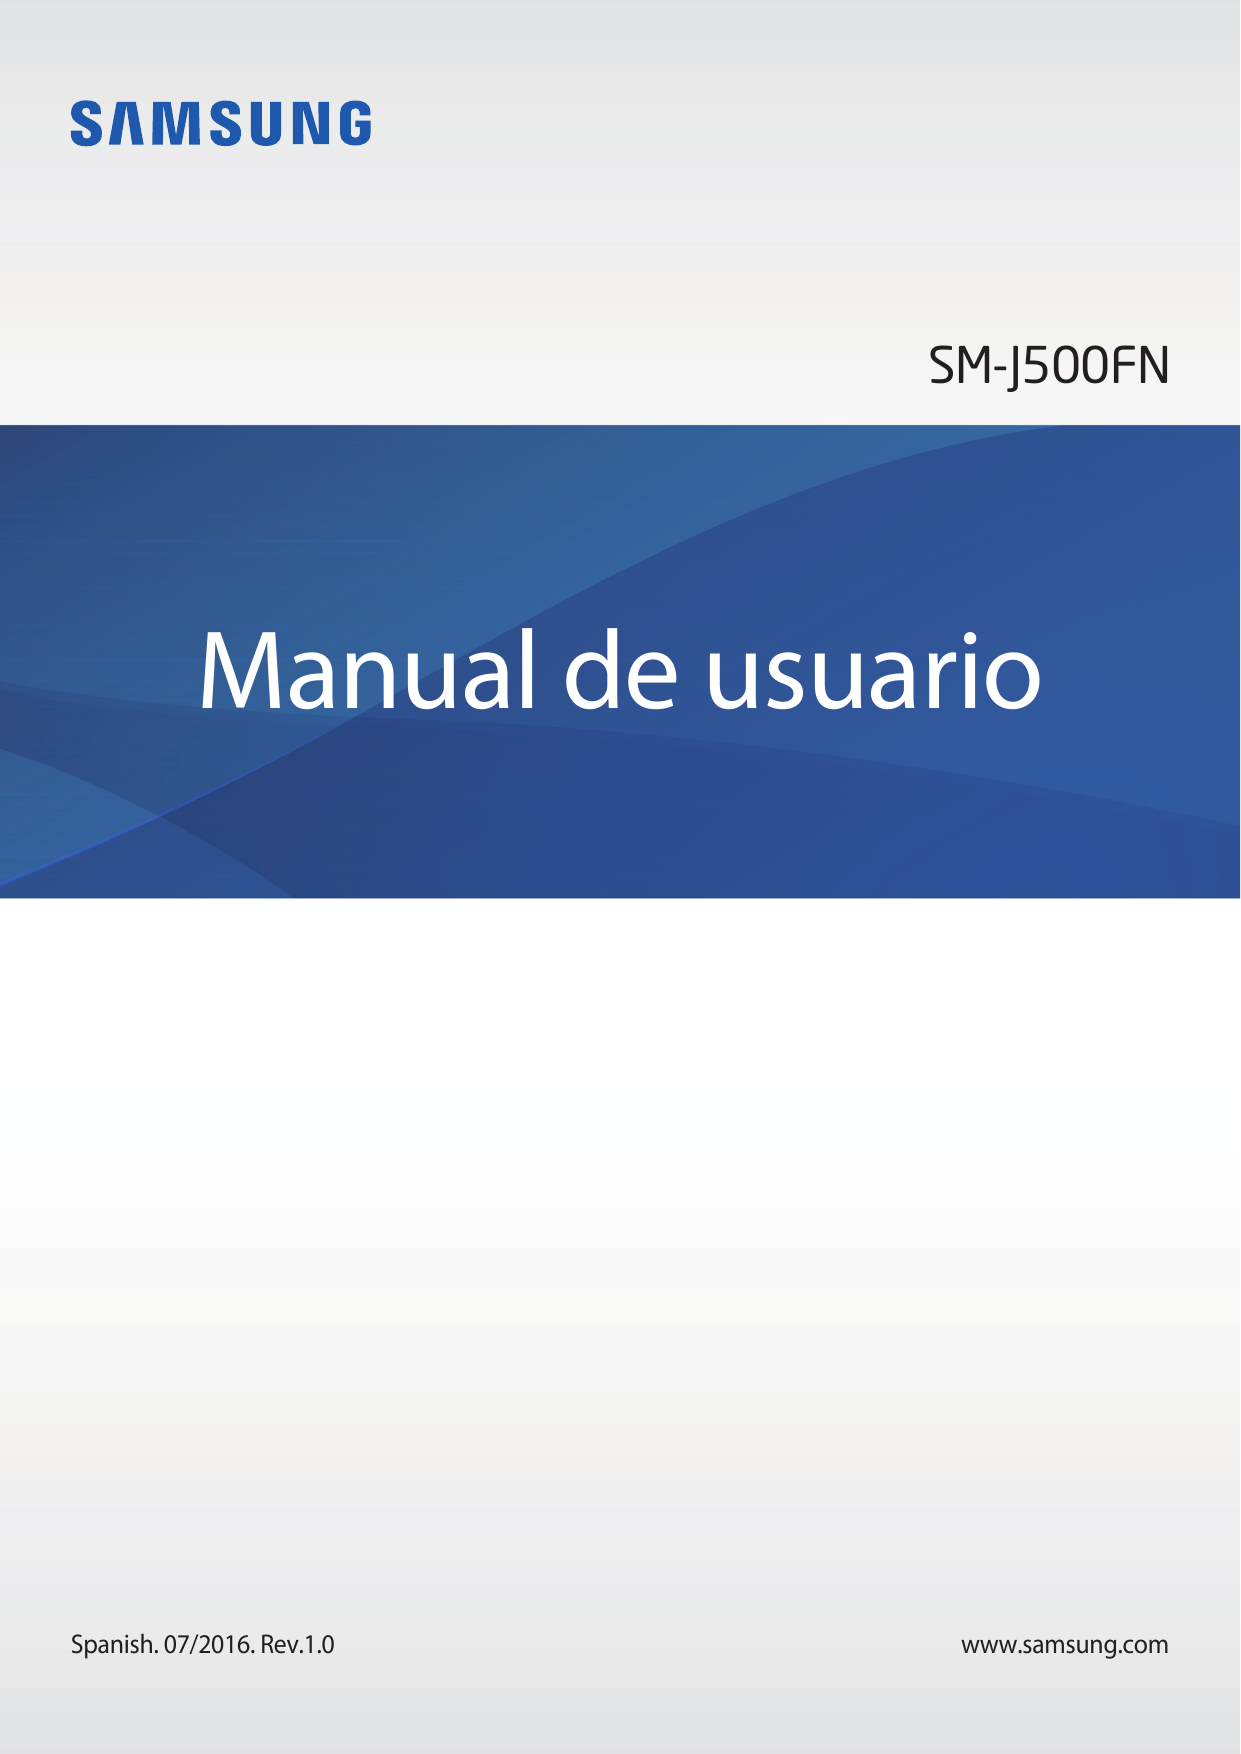 SM-J500FNManual de usuarioSpanish. 07/2016. Rev.1.0www.samsung.com